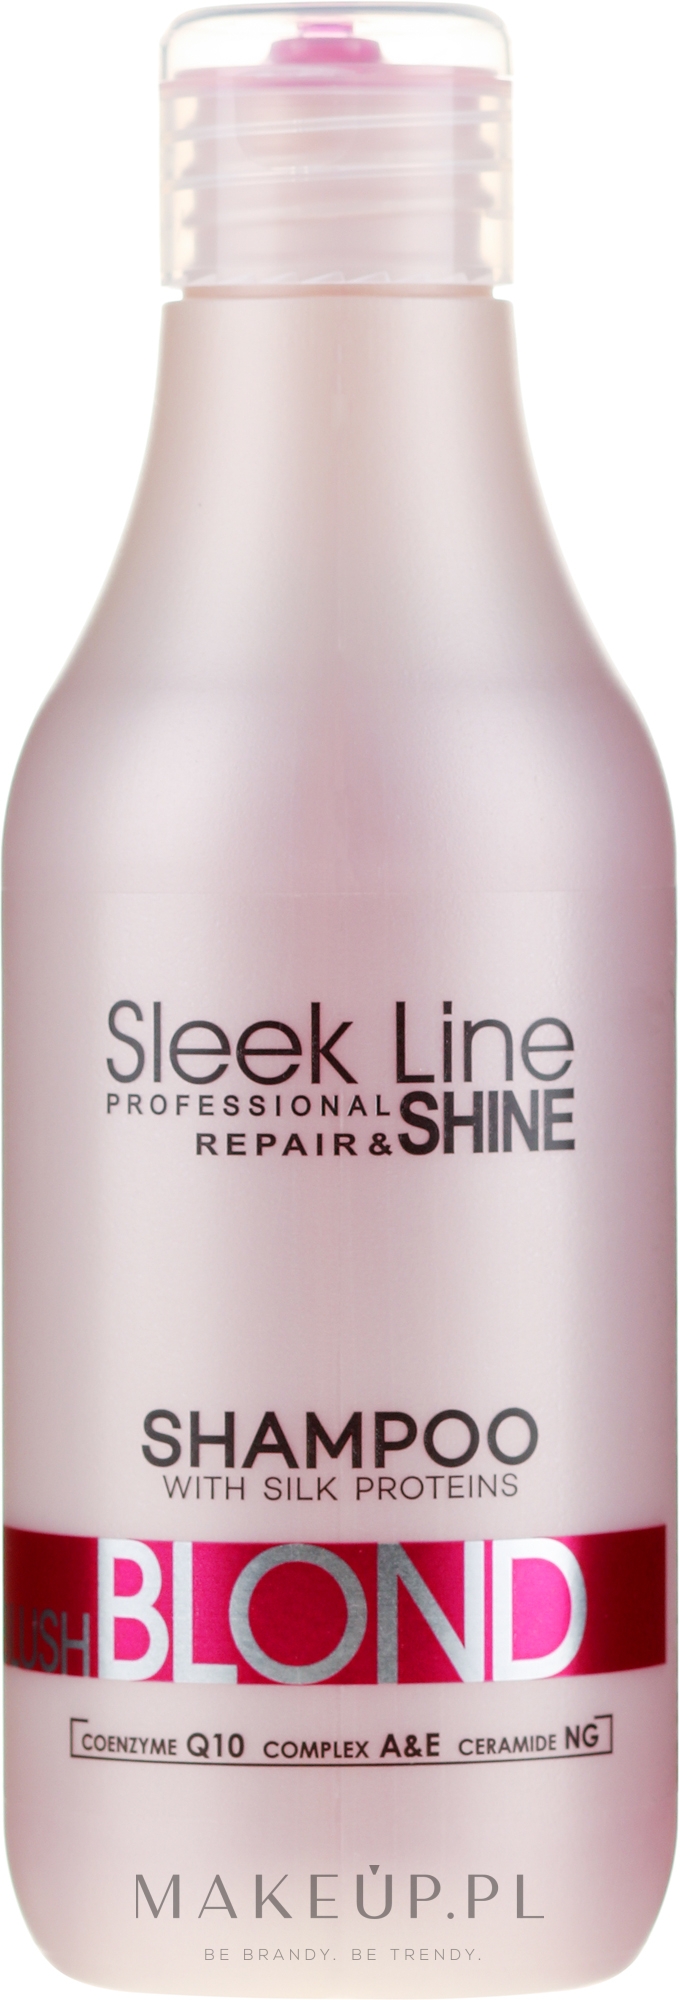 sleek line blush blonde różowy szampon